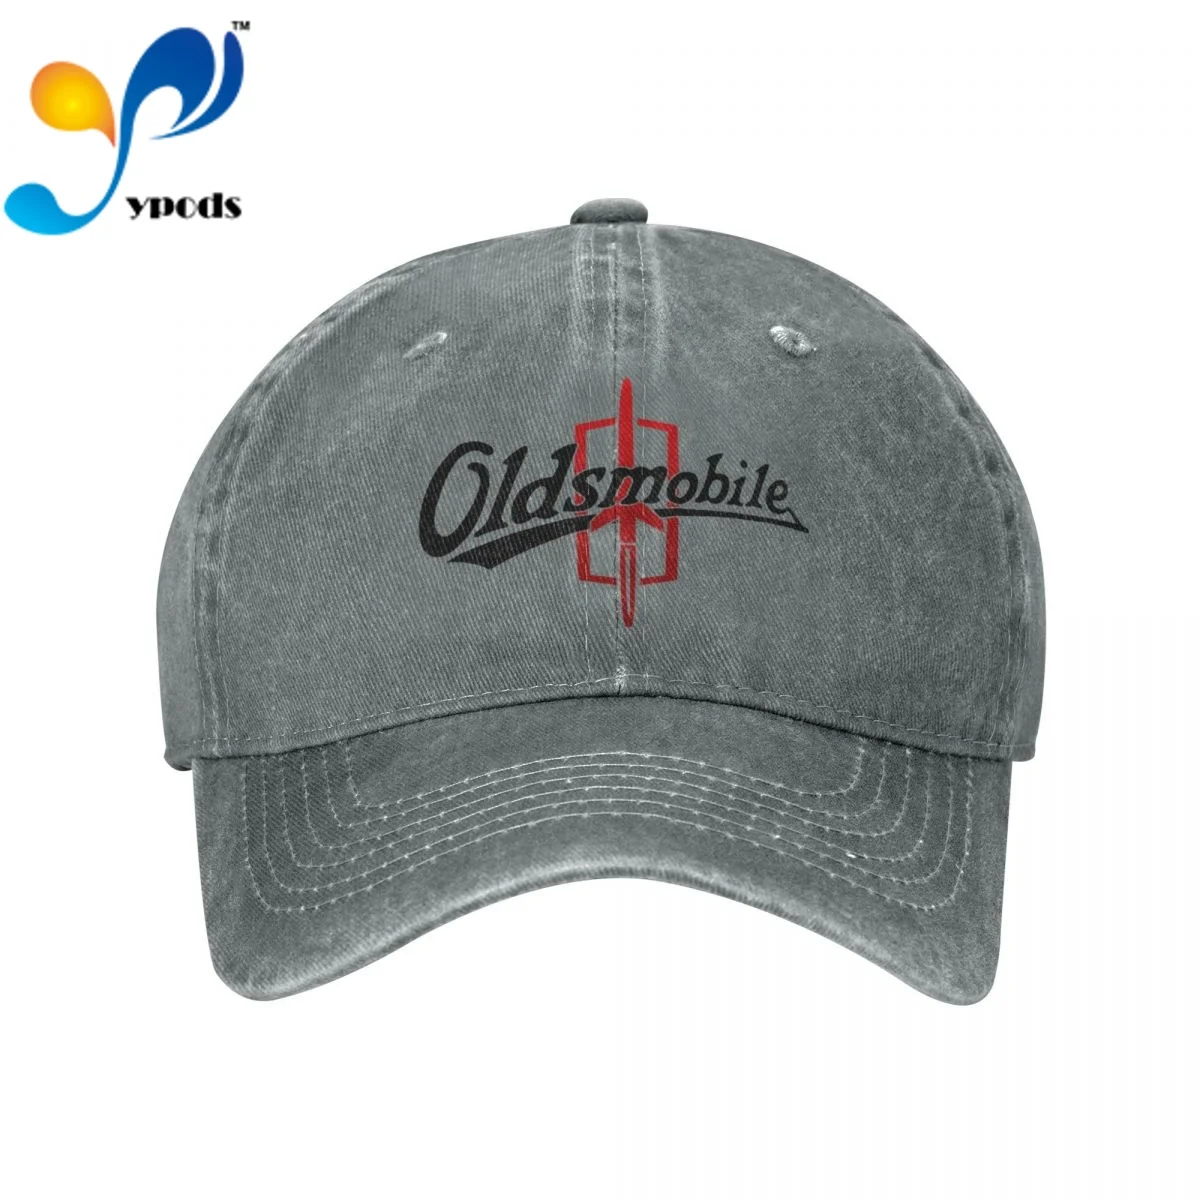 

Cutlass 442 Vintage Oldsmobile Emblem Racing Reprint Logo 1 Denim Baseball cap Snapback Hats Hat Caps Casquette hat